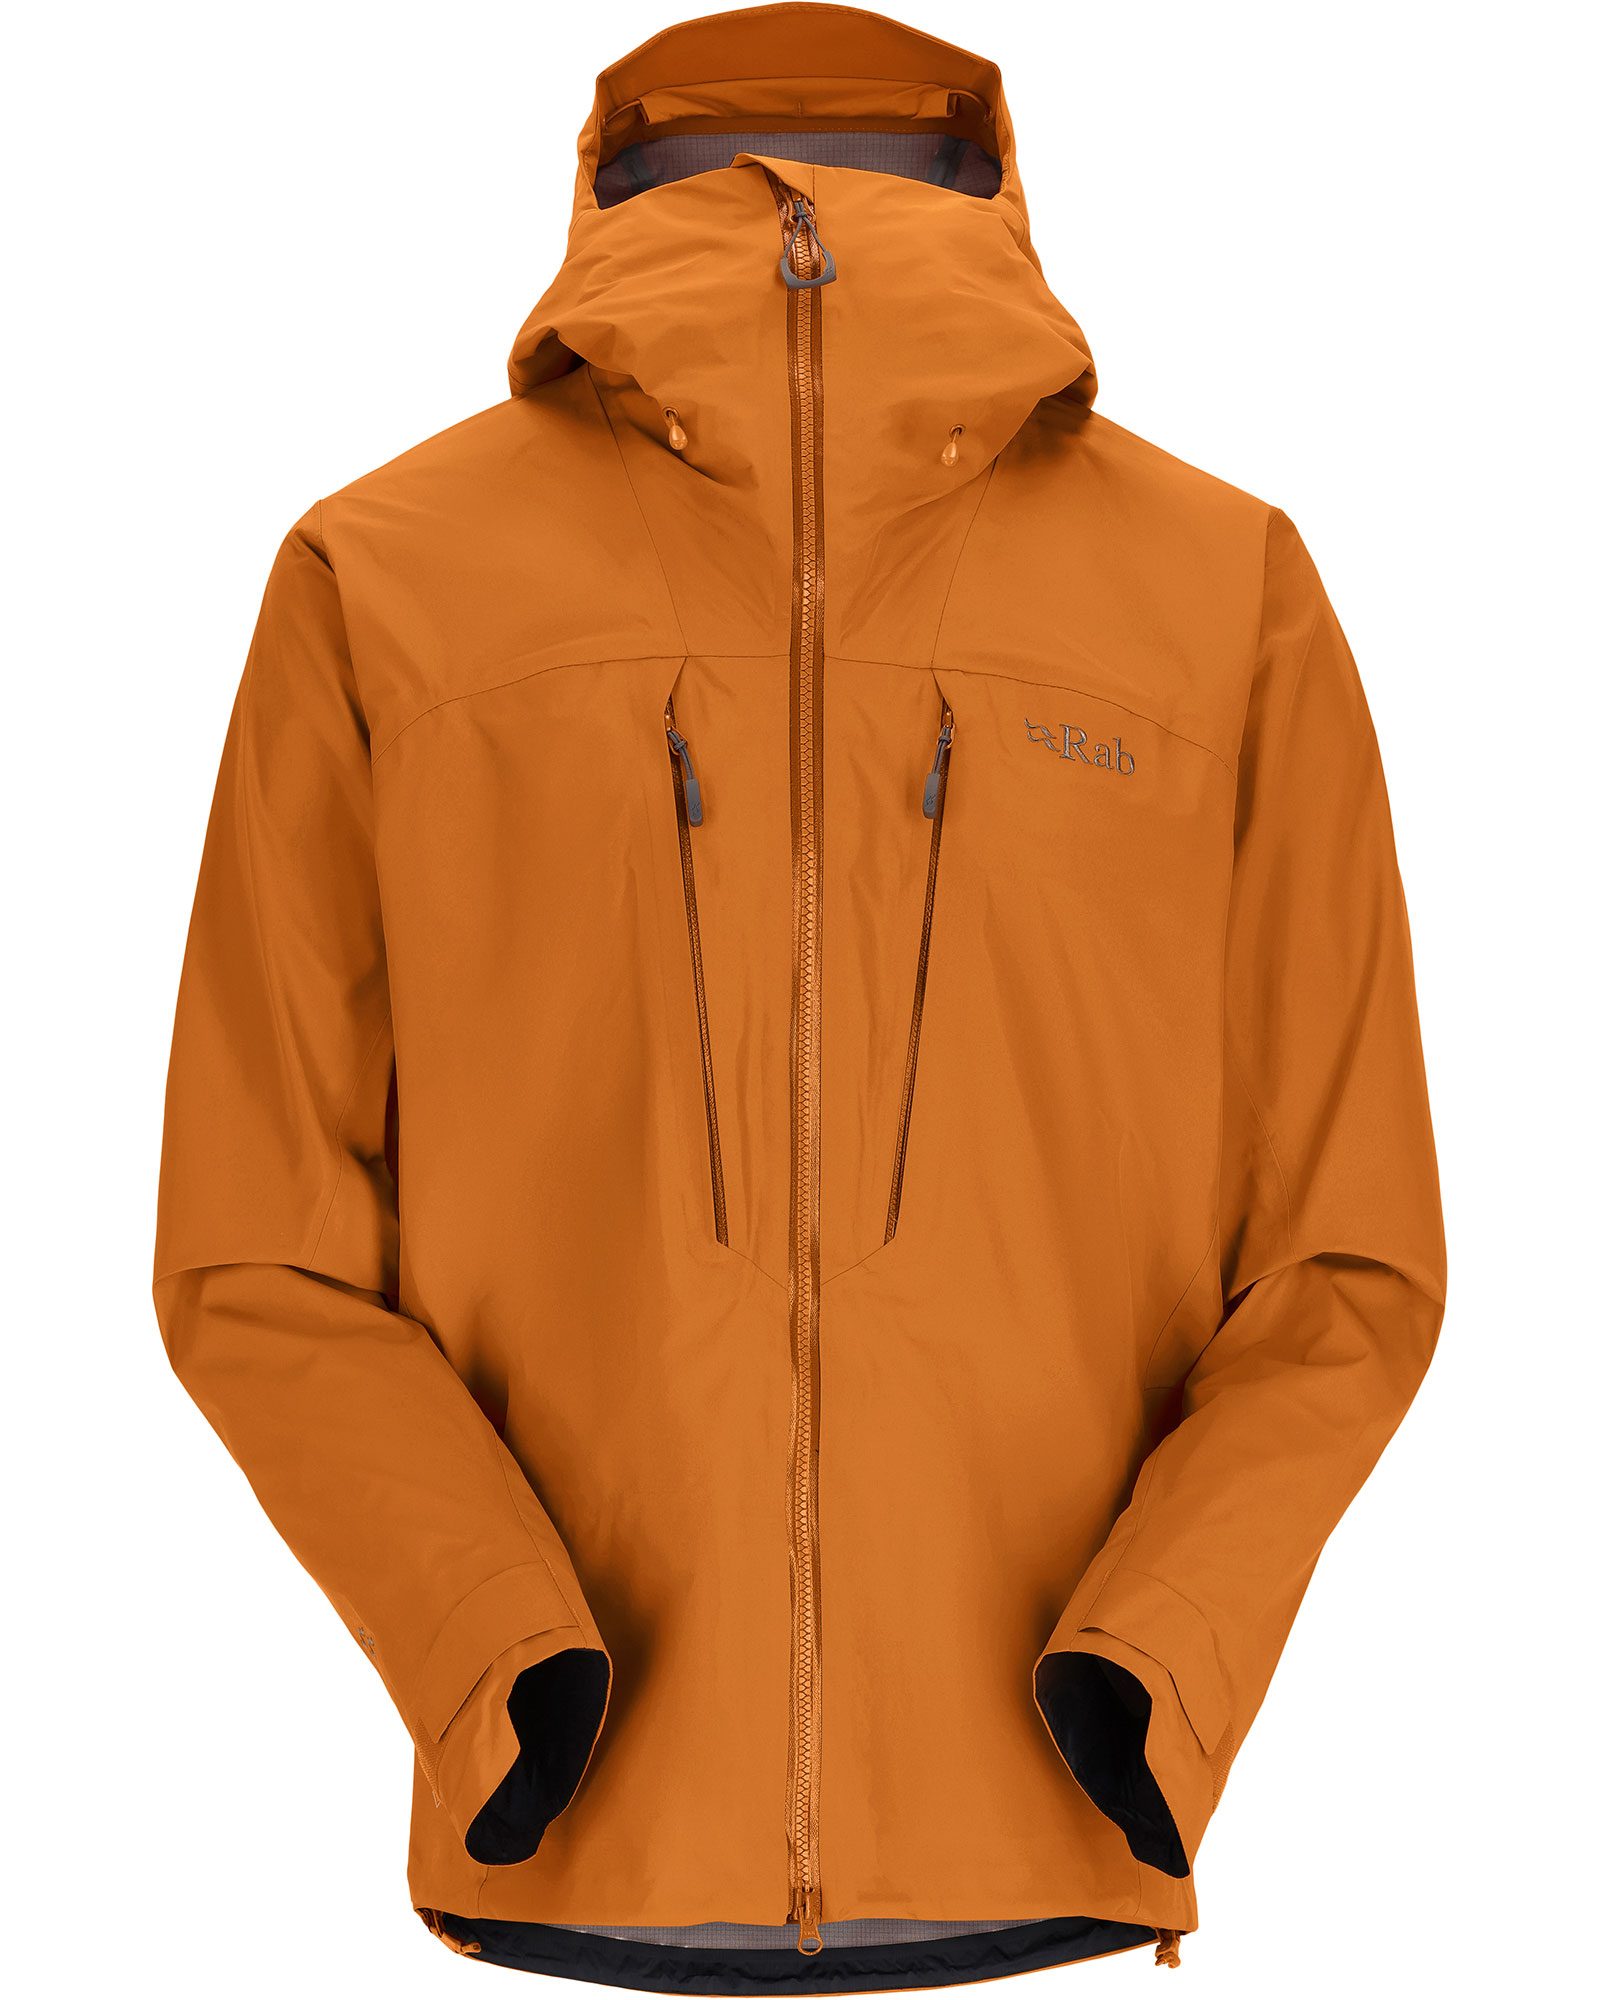 Rab Latok Alpine GORE TEX Pro Men’s Jacket - Marmalade S